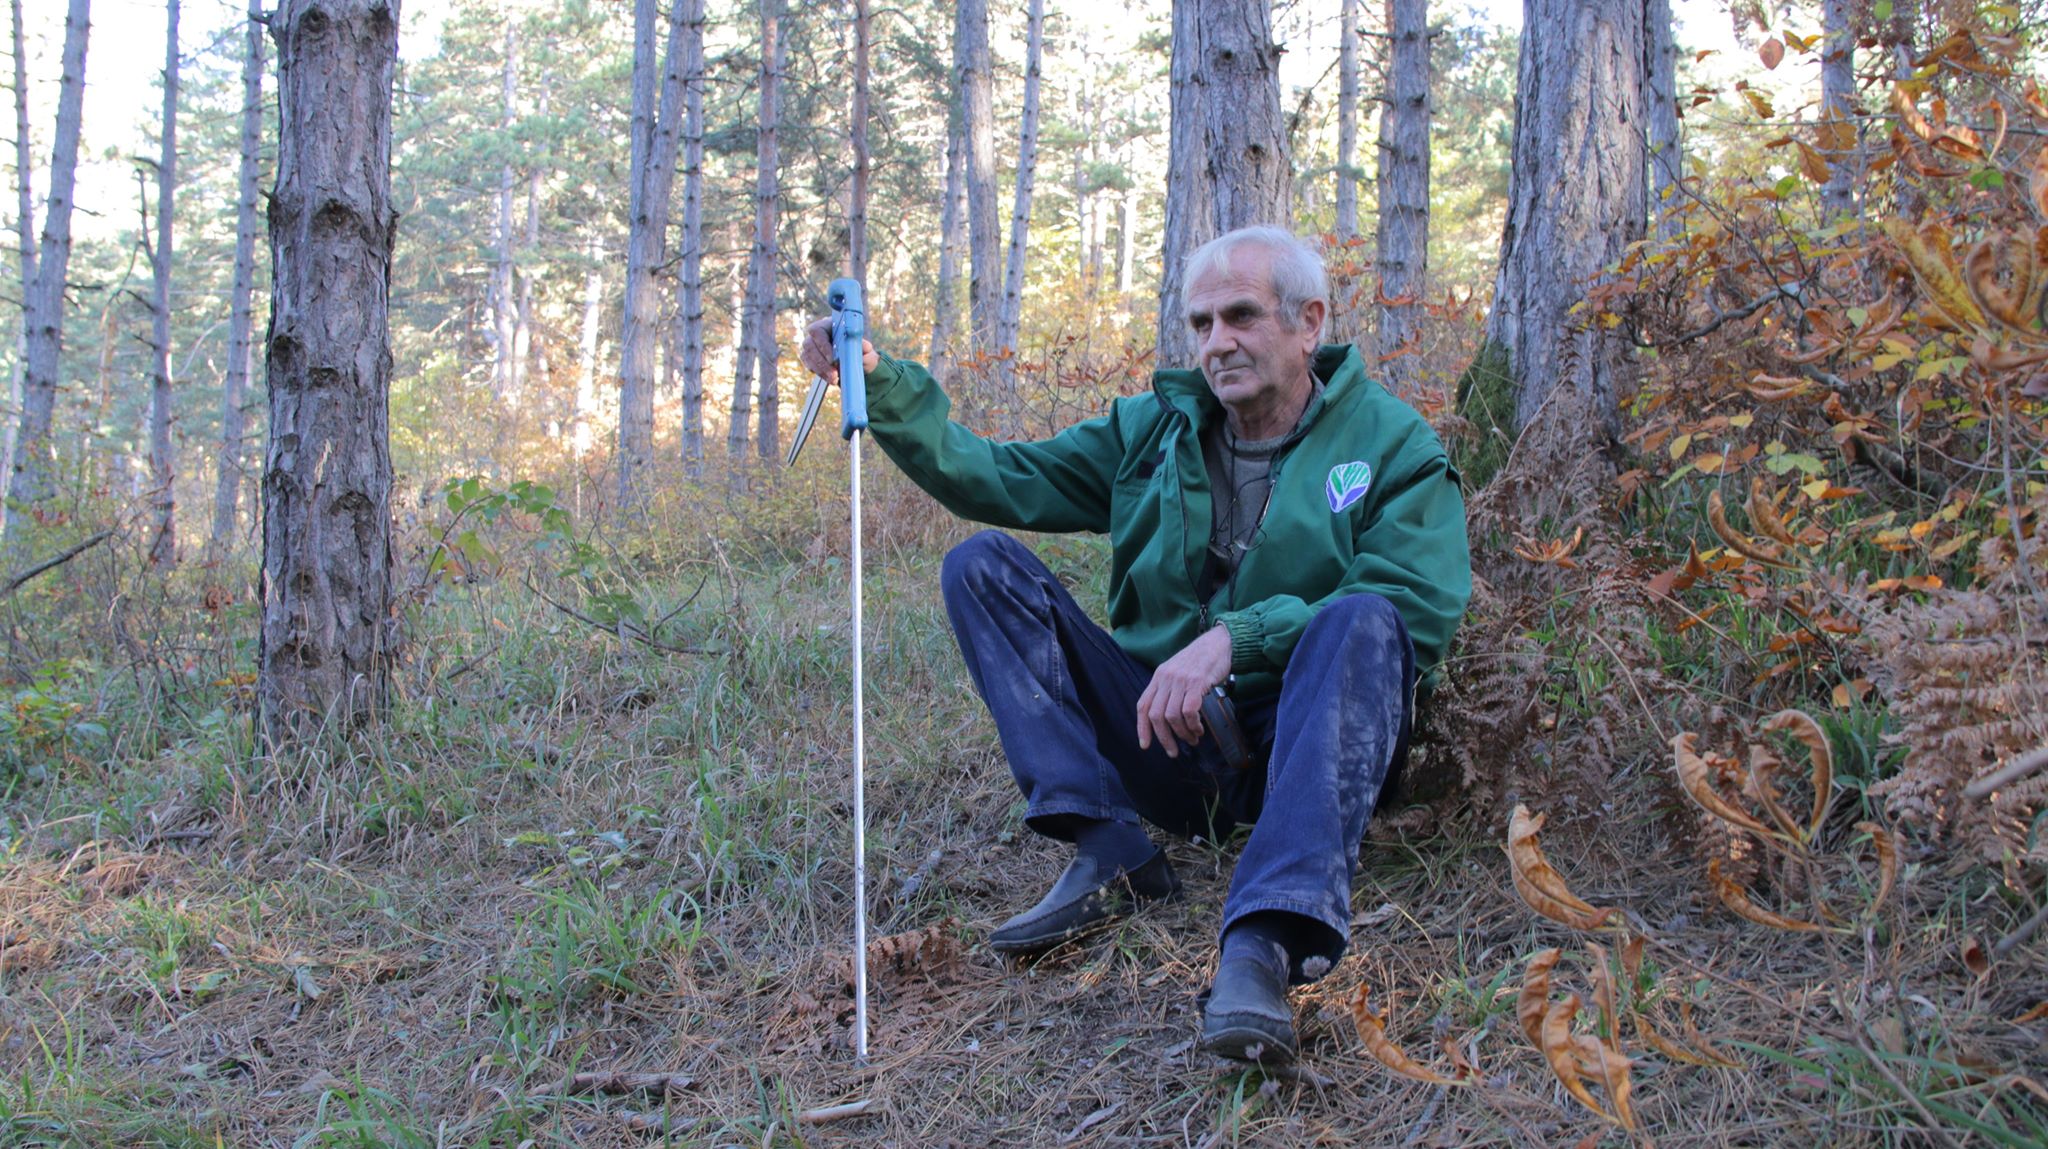 Meet the Forester - Zurab Khmiadashvili, Forester of Shida Kartli Forestry Service